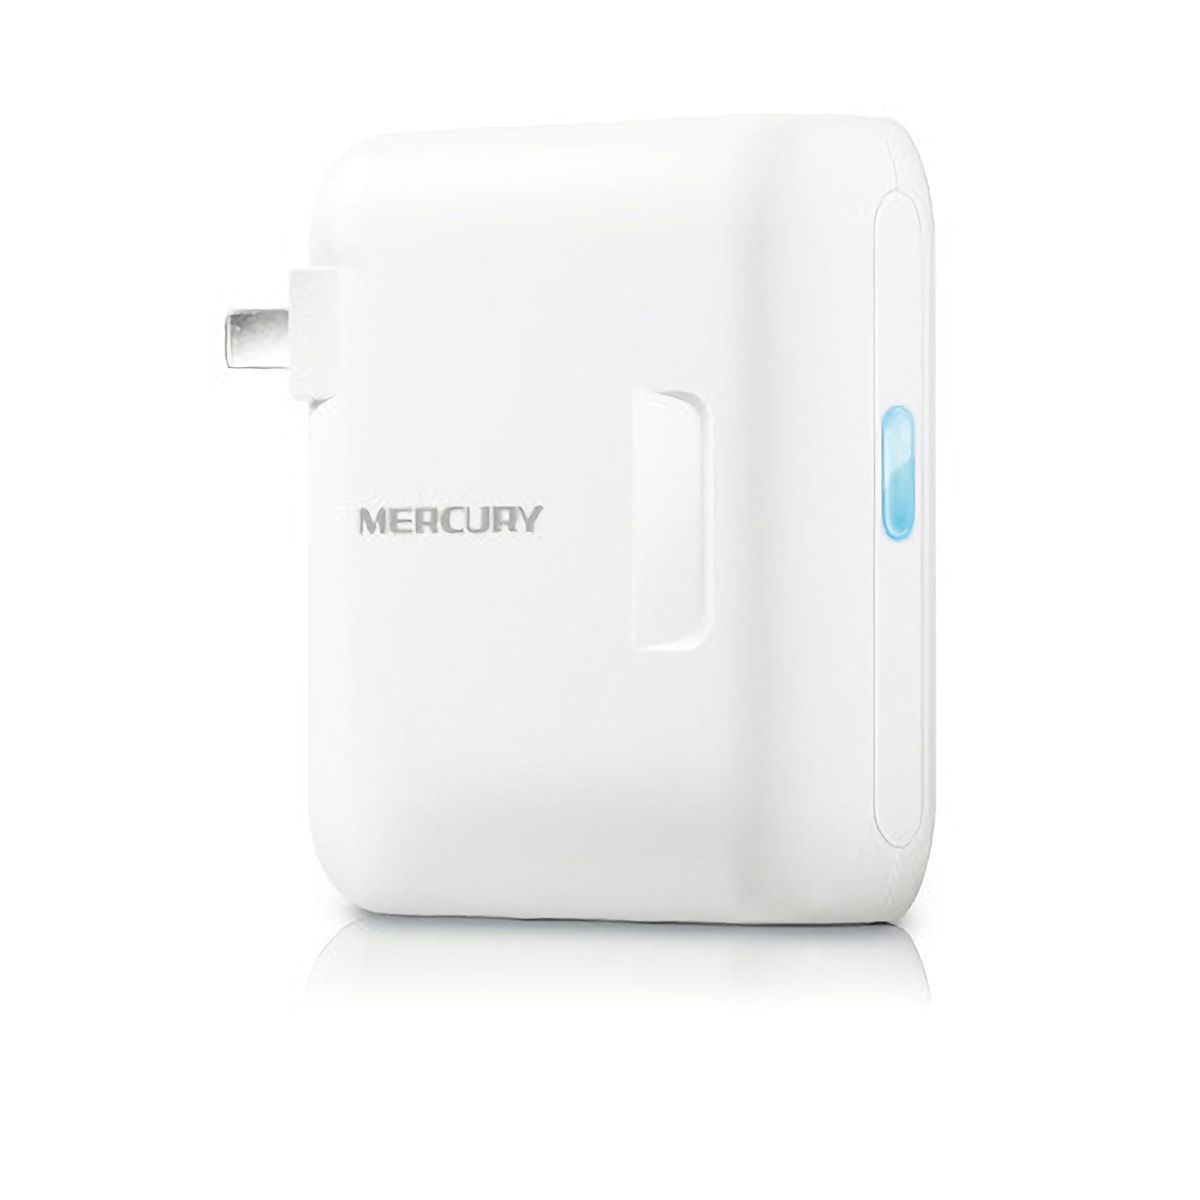 Mercury-Mini-Wireless-Router-150Mbps-1-Port-Support-AP-Client-Repeate-Bridge-Router-MW150RM-1751023